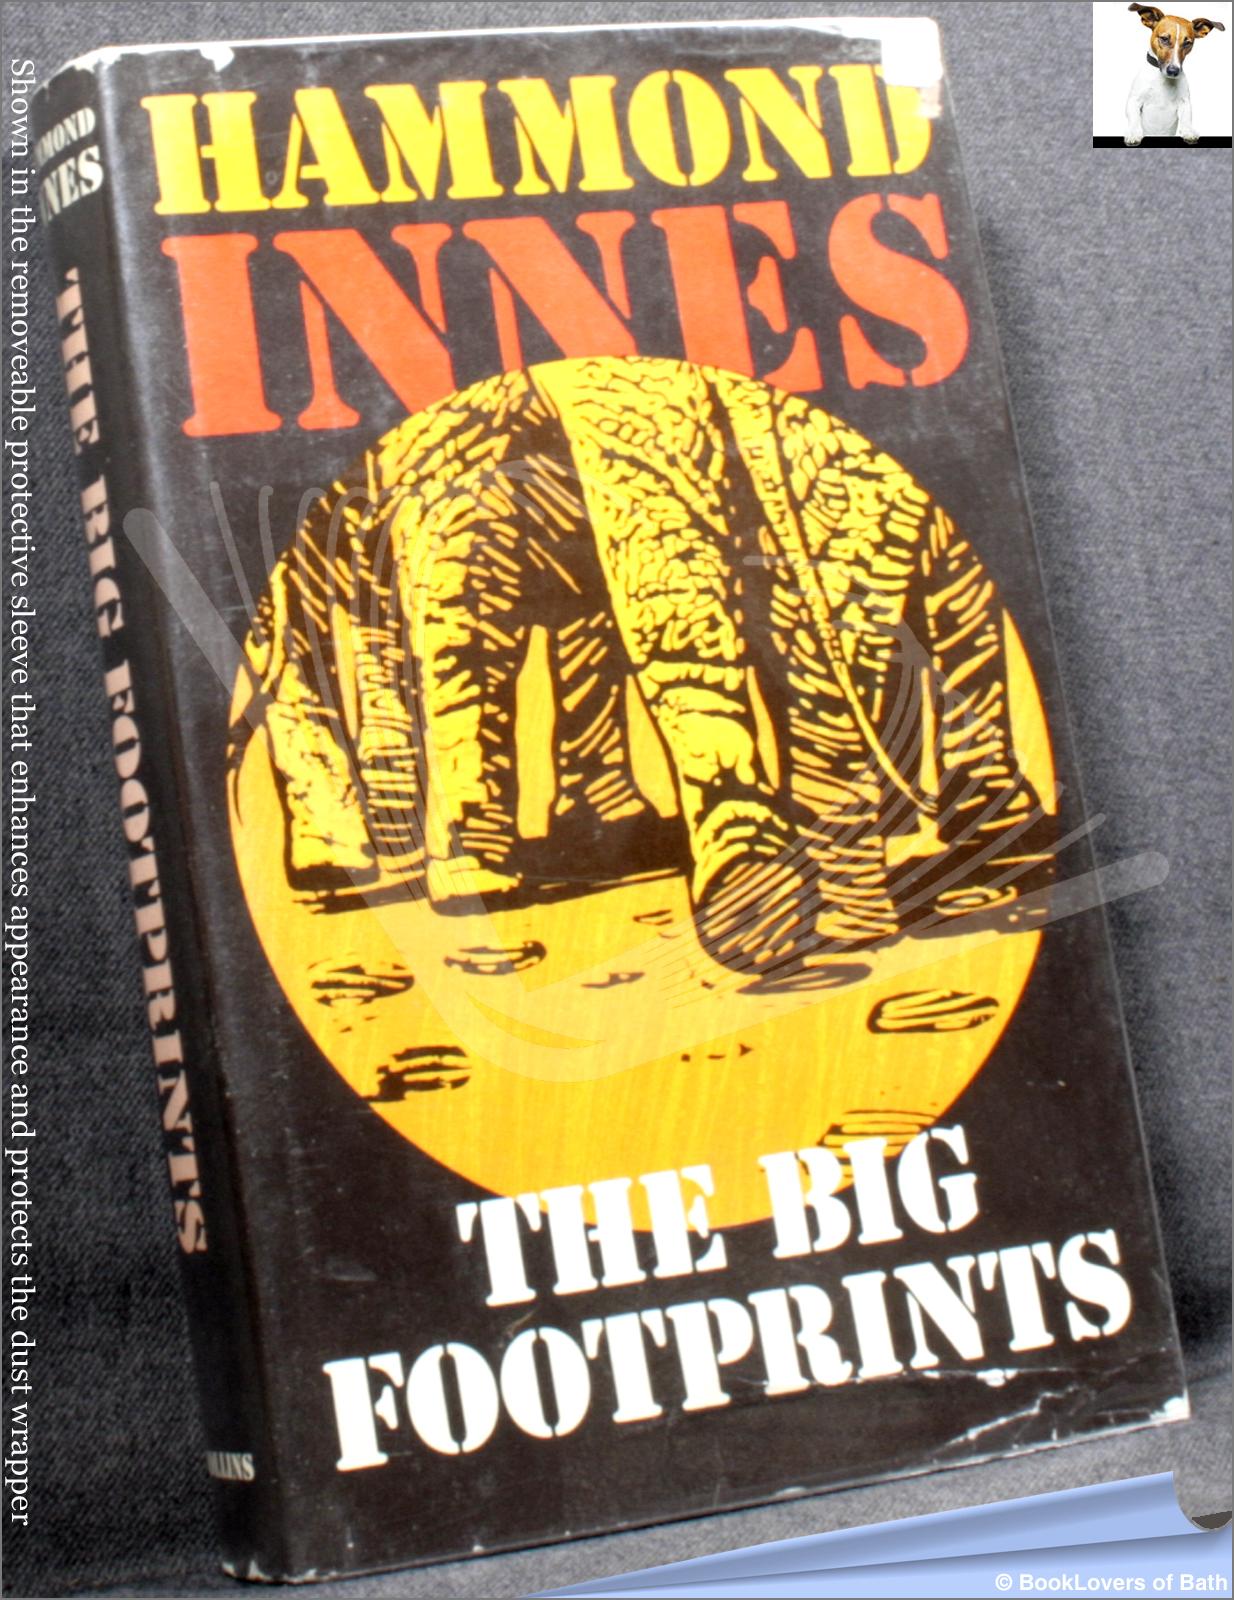 The Big Footprints - Hammond Innes